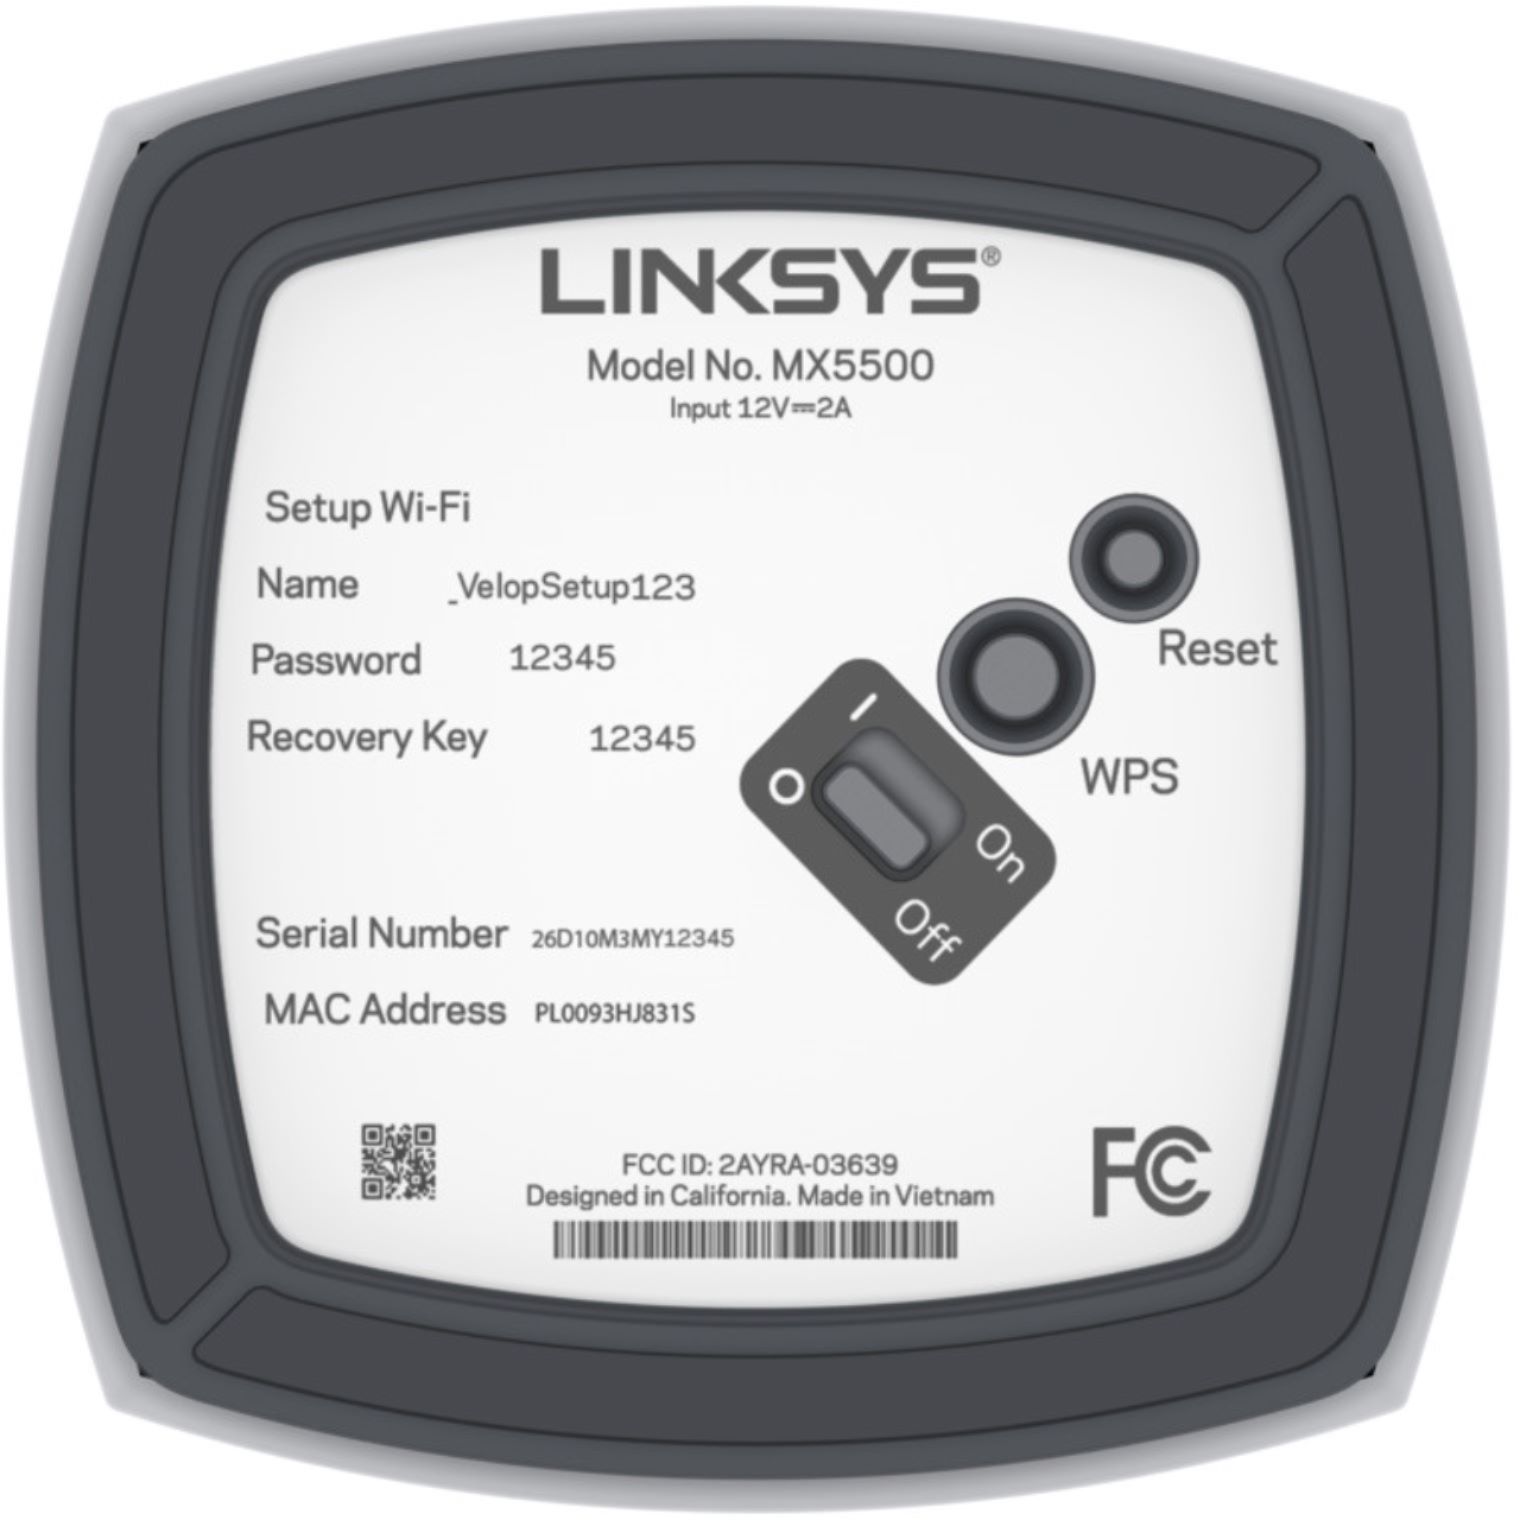 Linksys Atlas Pro 6 WiFi 6 Router AX5400 Dual-Band WiFi Mesh